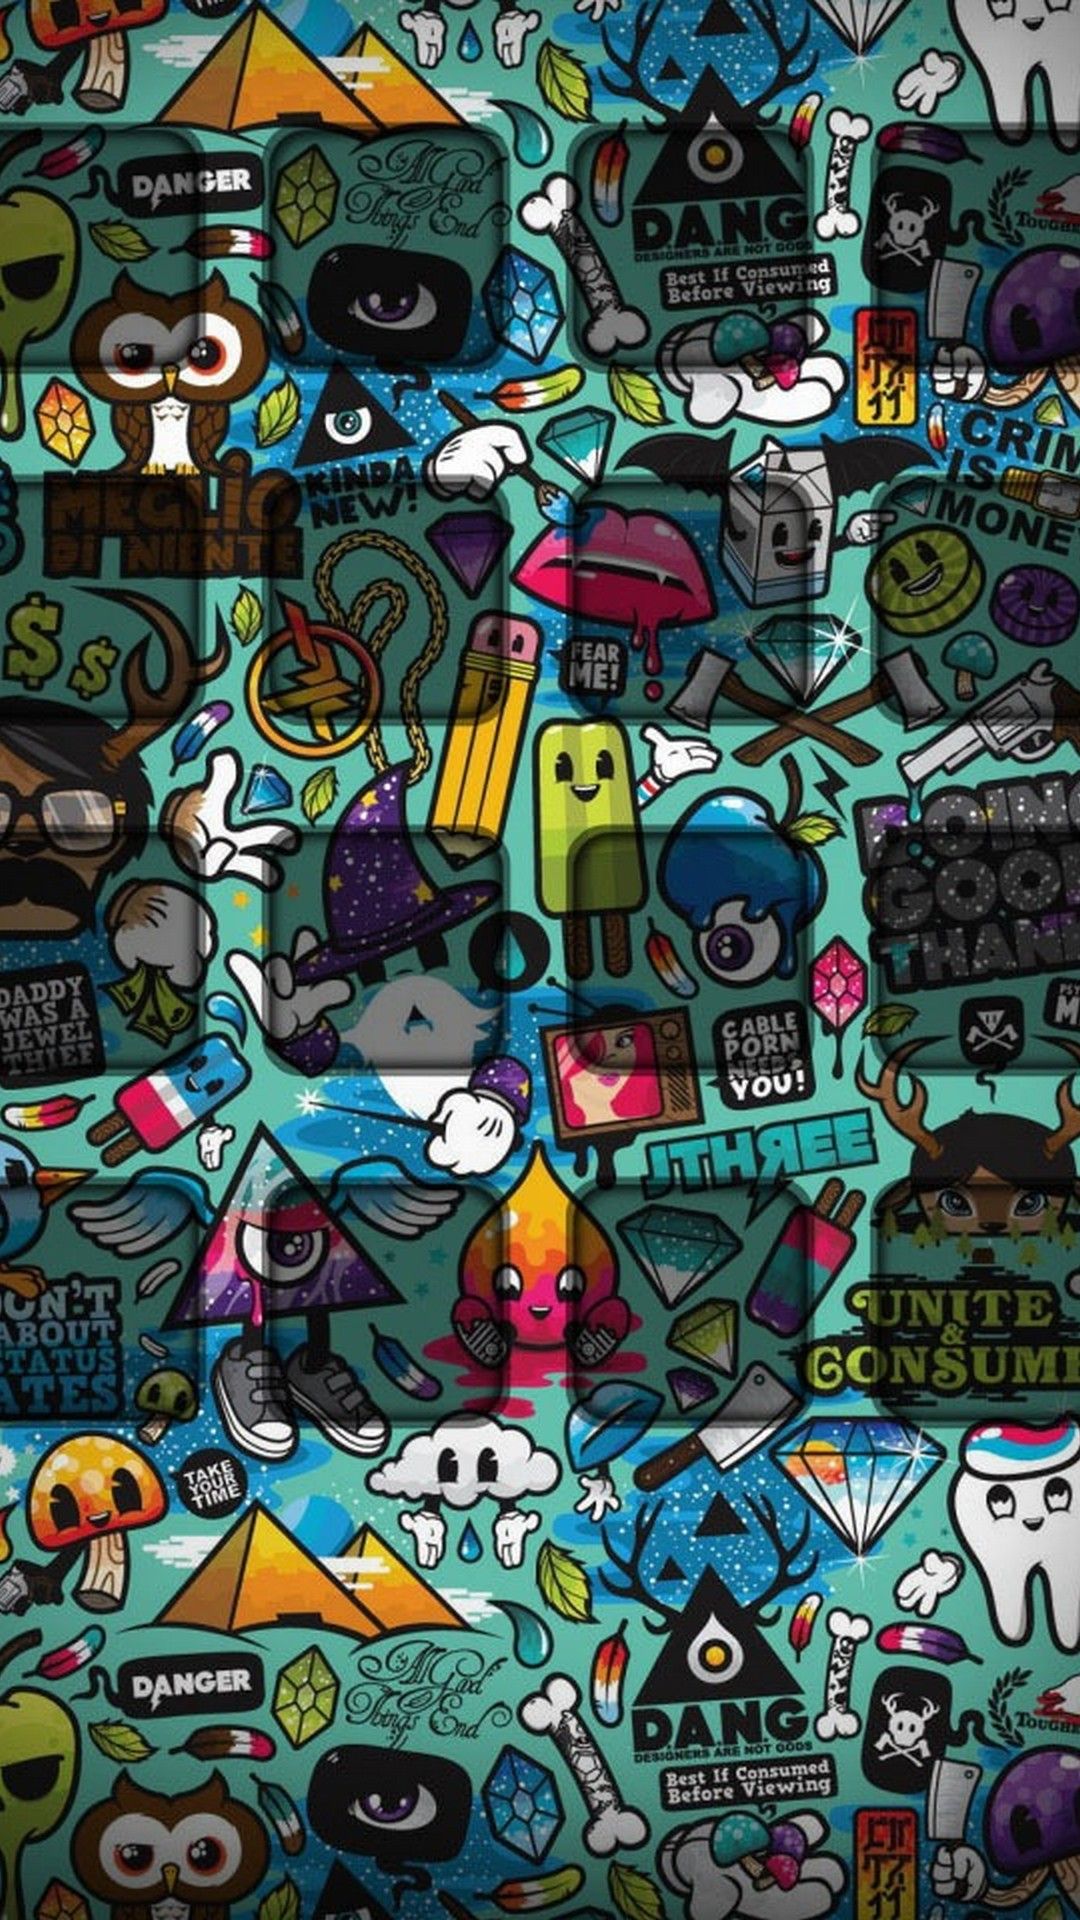 Iphone Graffiti Wallpapers